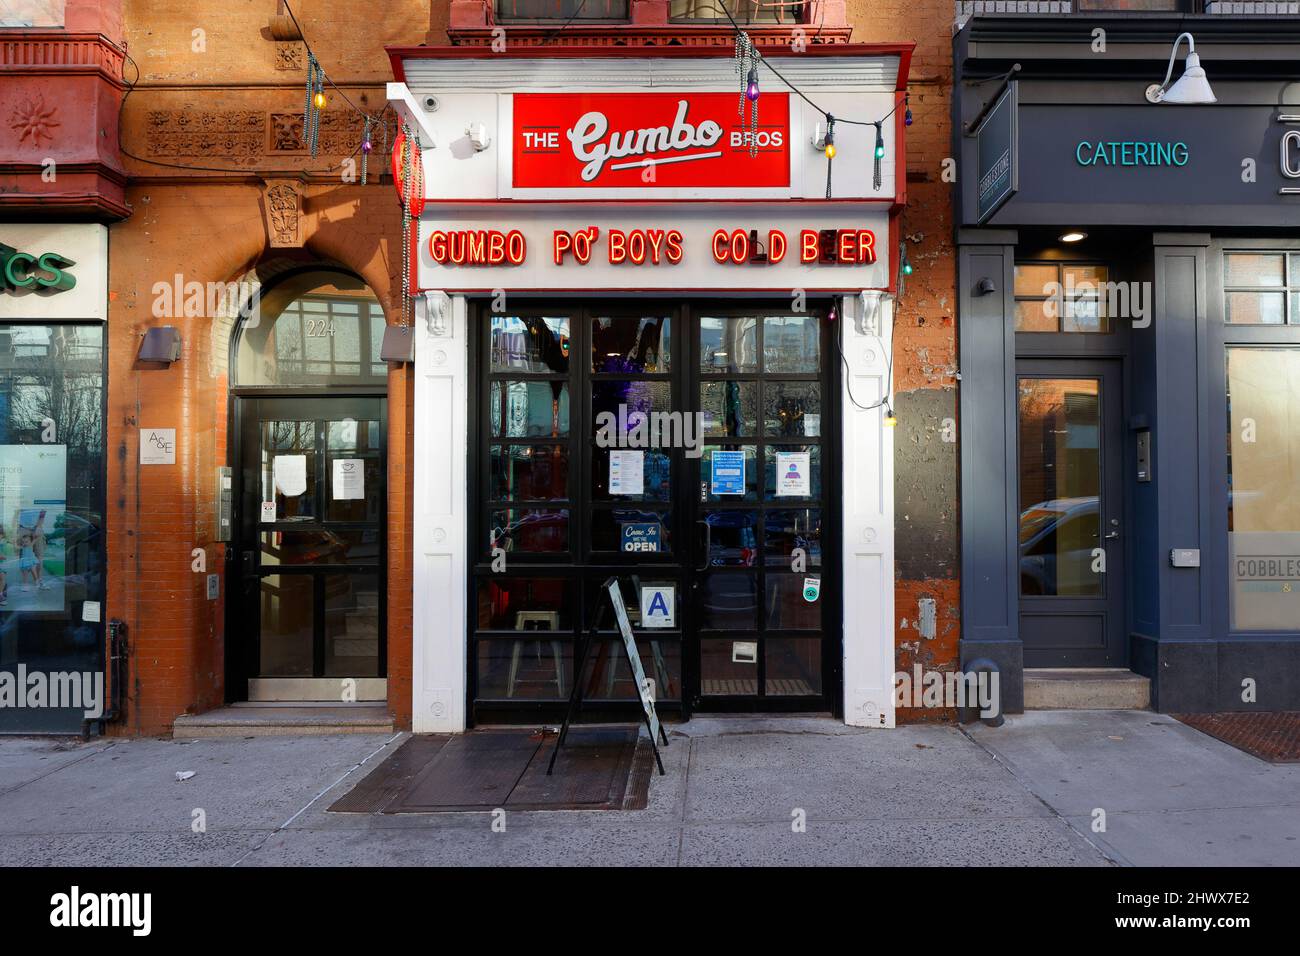 The Gumbo Bros, 224 Atlantic Ave, Brooklyn, New York photo d'un restaurant cajun à Cobble Hill, dans le quartier de Boerum Hill. Banque D'Images